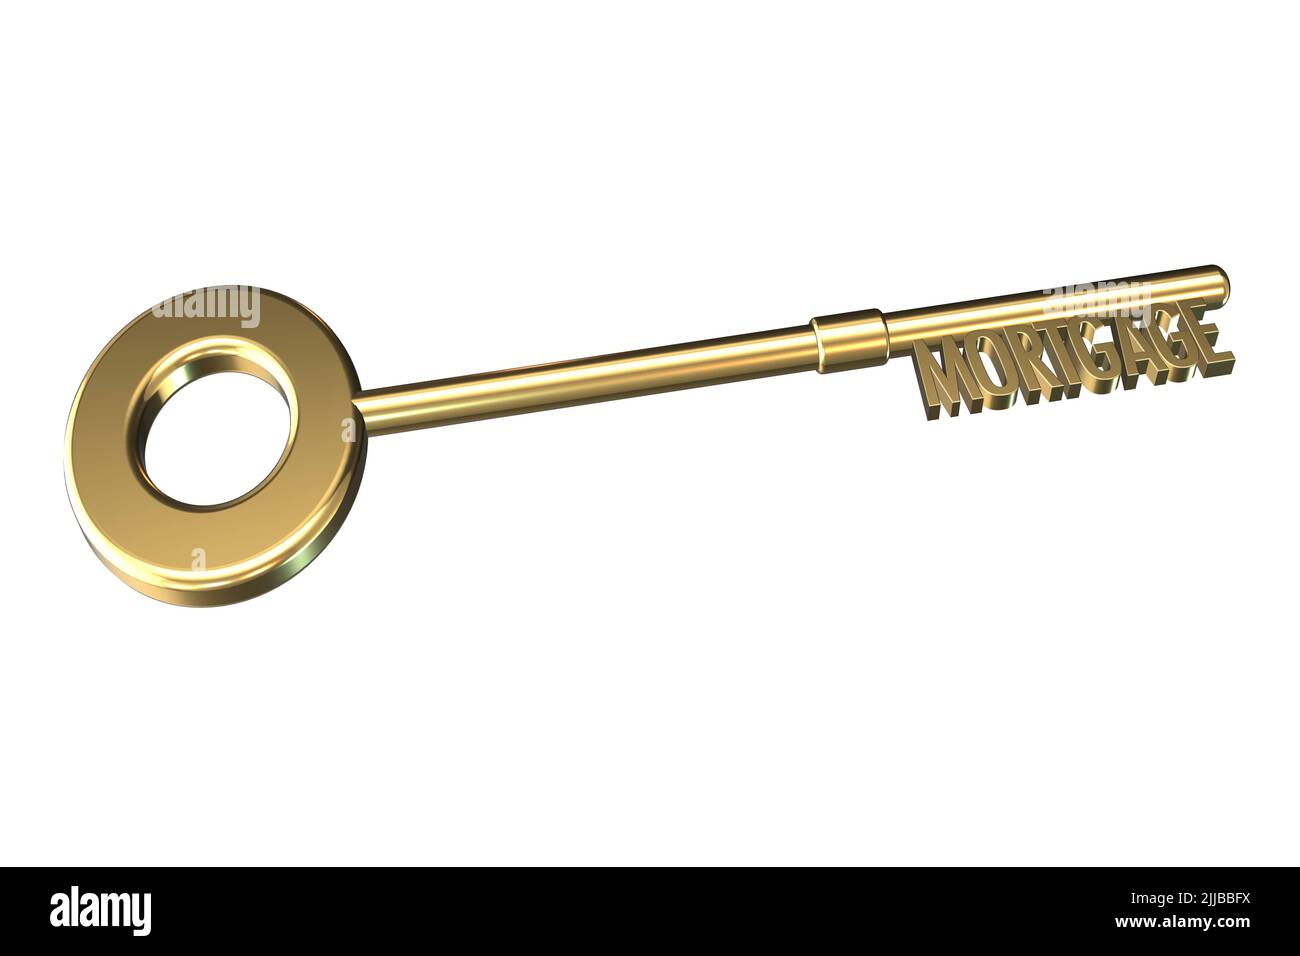 mortgage key keys concept of gold metallic 3D key to house home borrow borrowing house loan loans Stock Photo